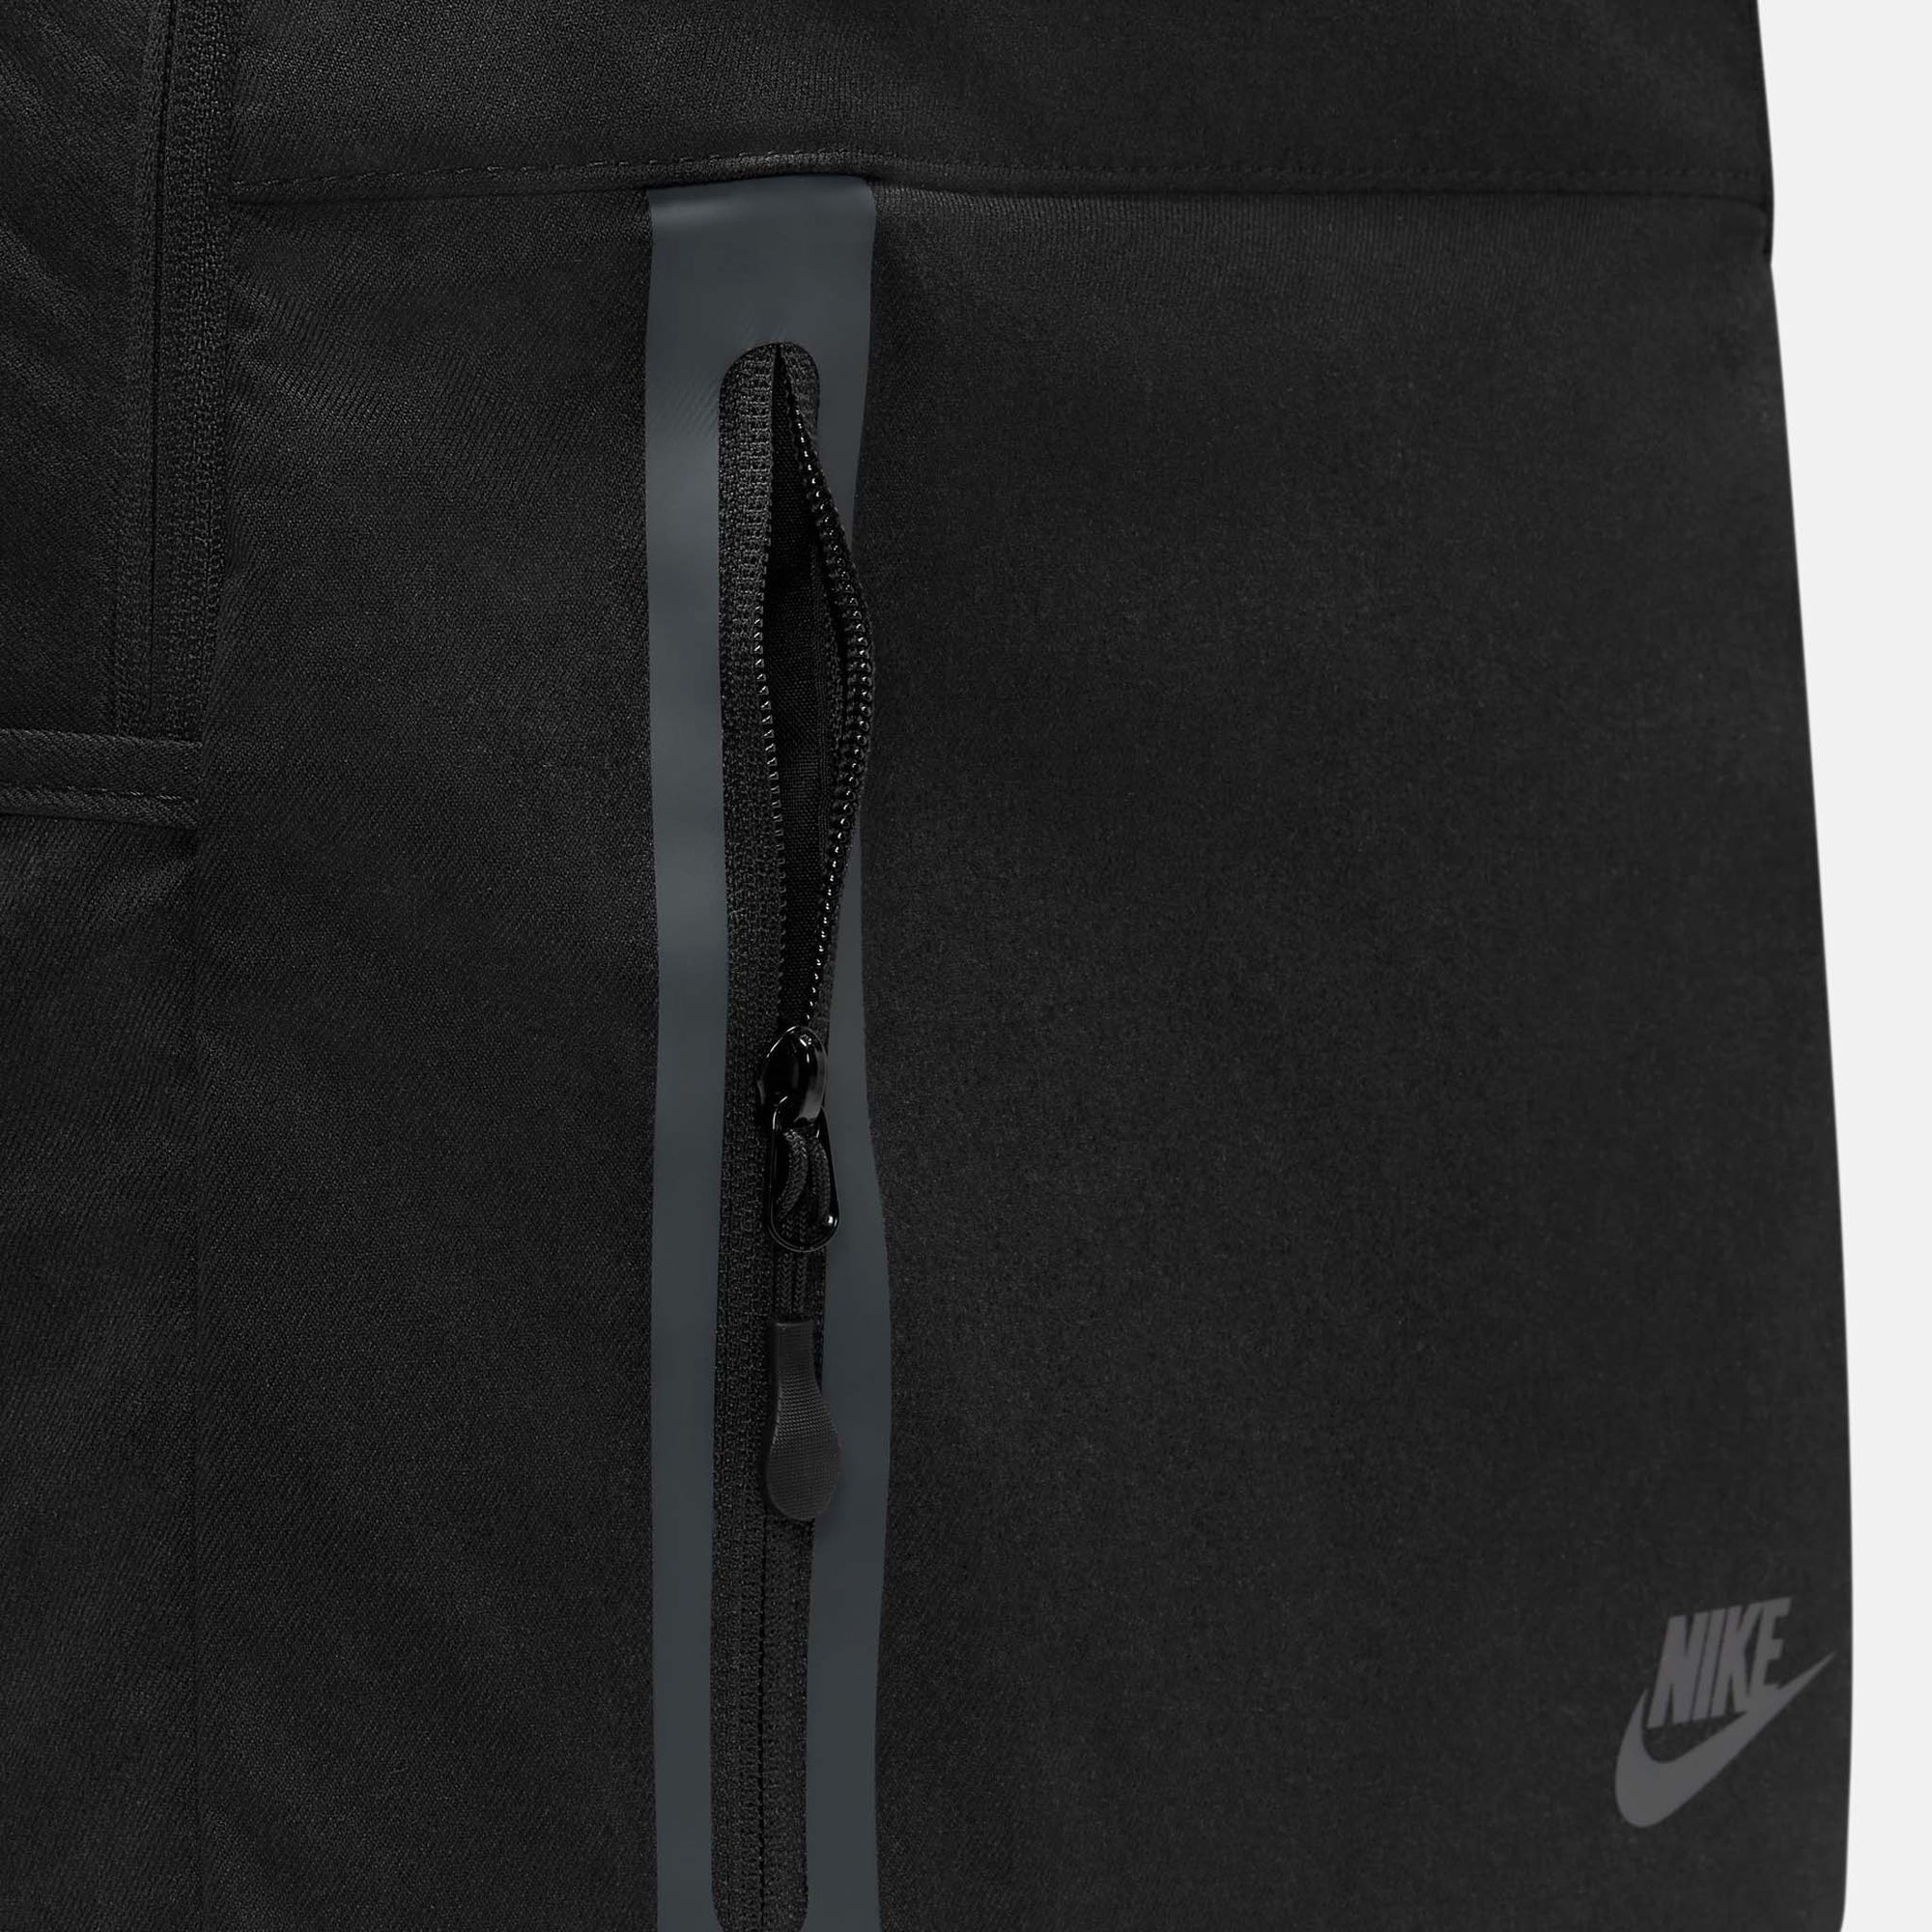 Nike SB - Elemental Premium Backpack - Black / Black